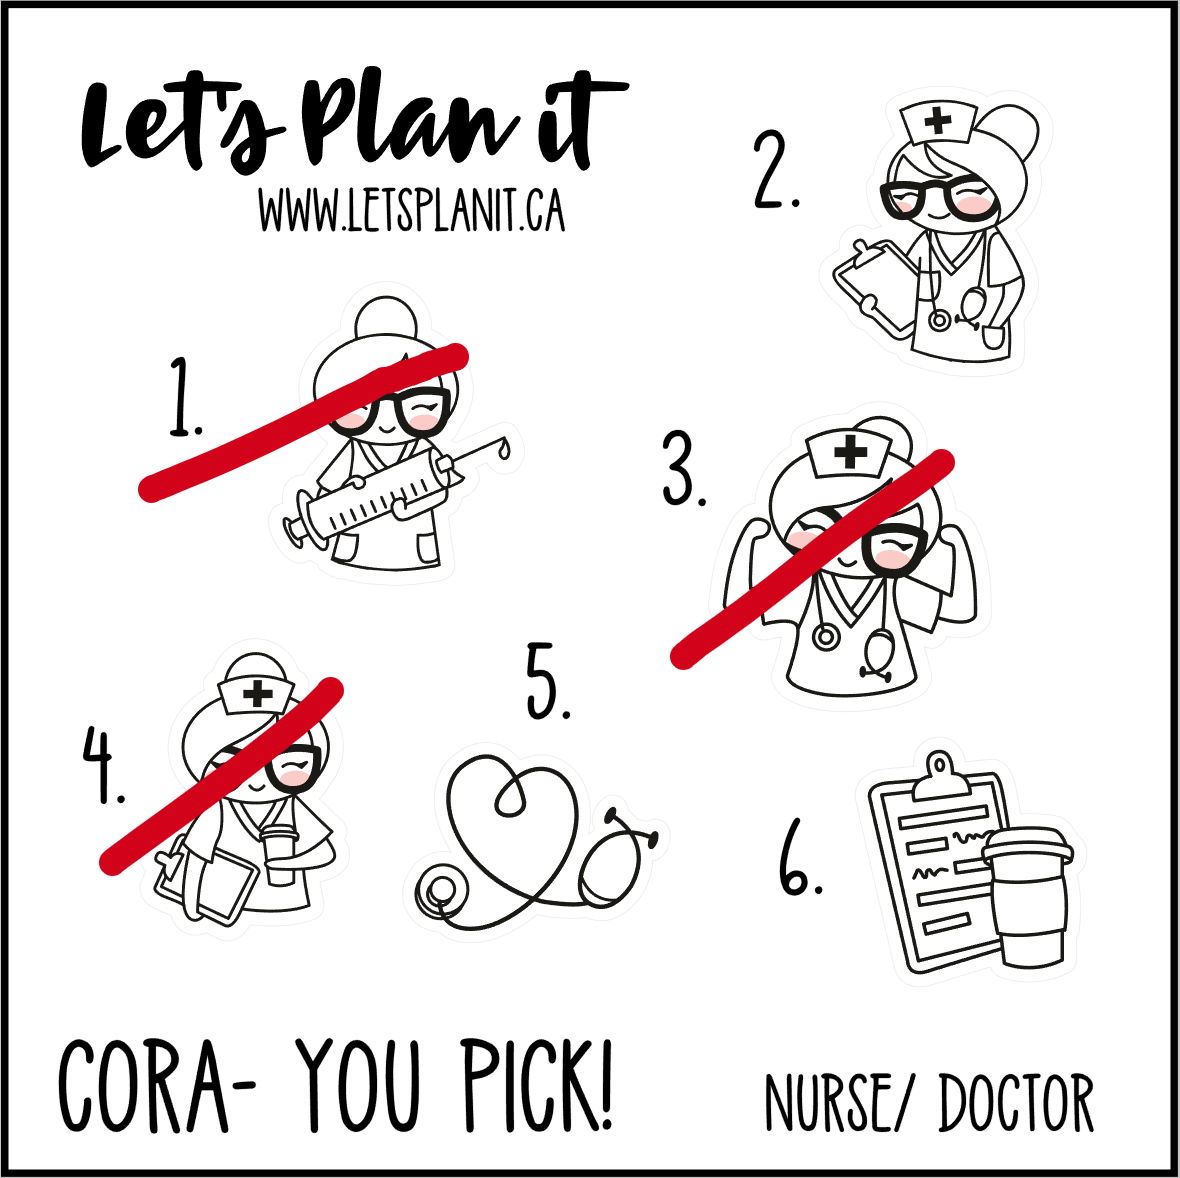 Cora-u-pick- Nurse